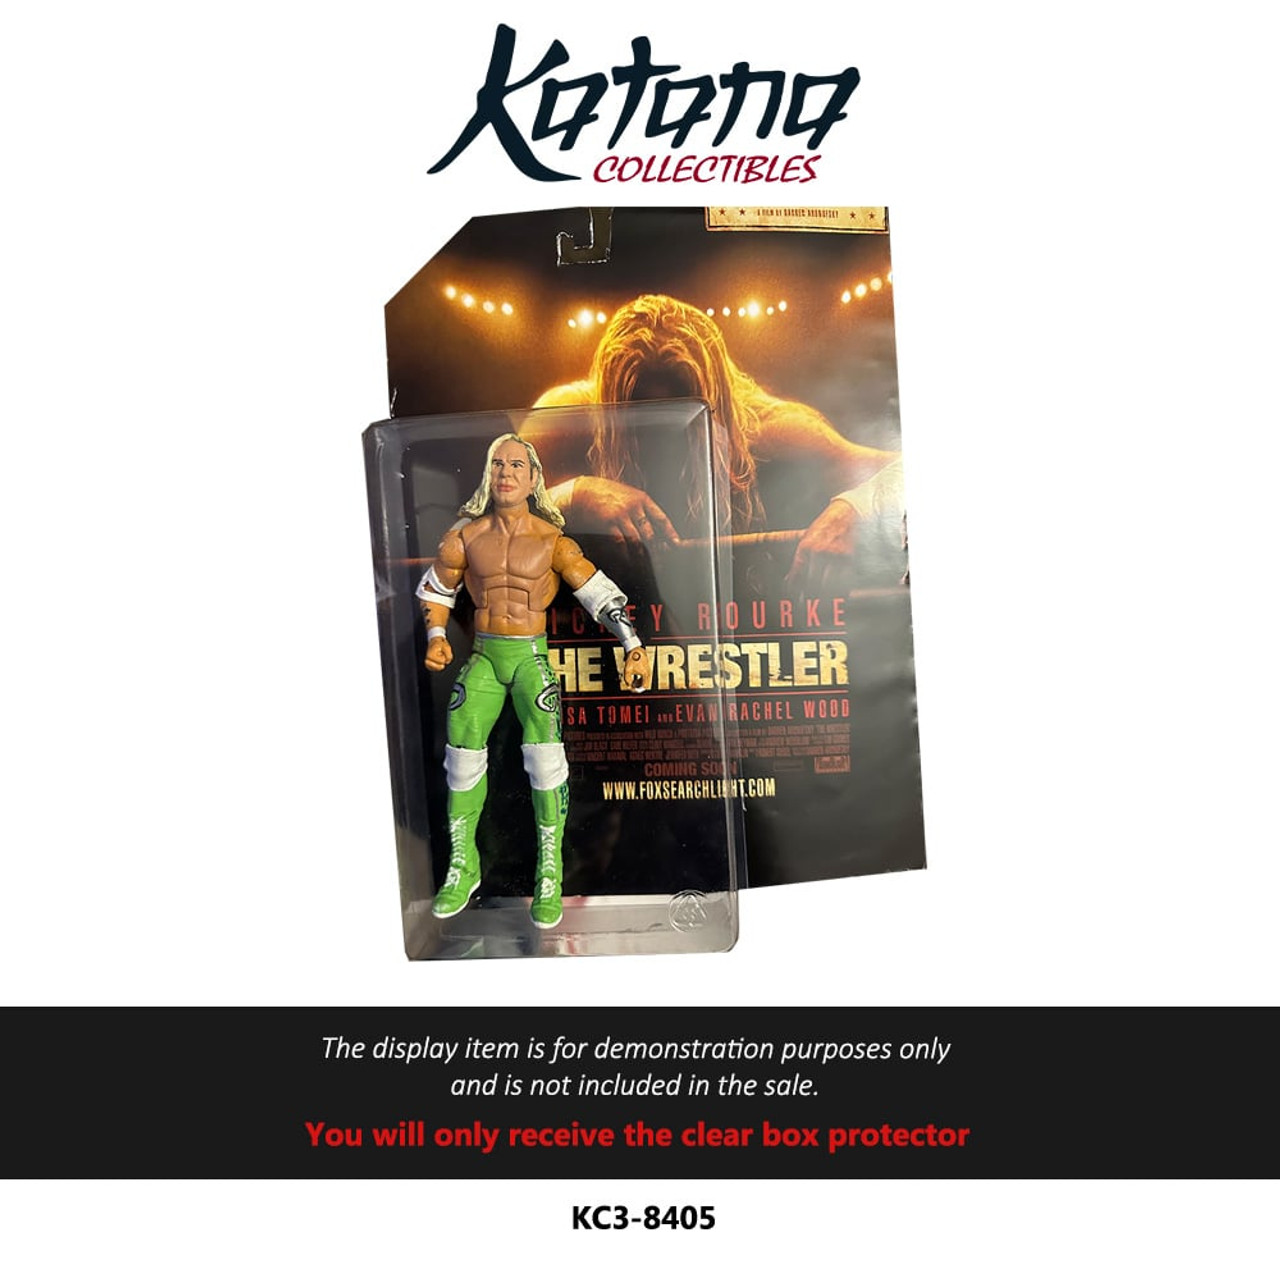 Katana Collectibles Protector For Mickey Rourke The Wrestler Mattel Custom